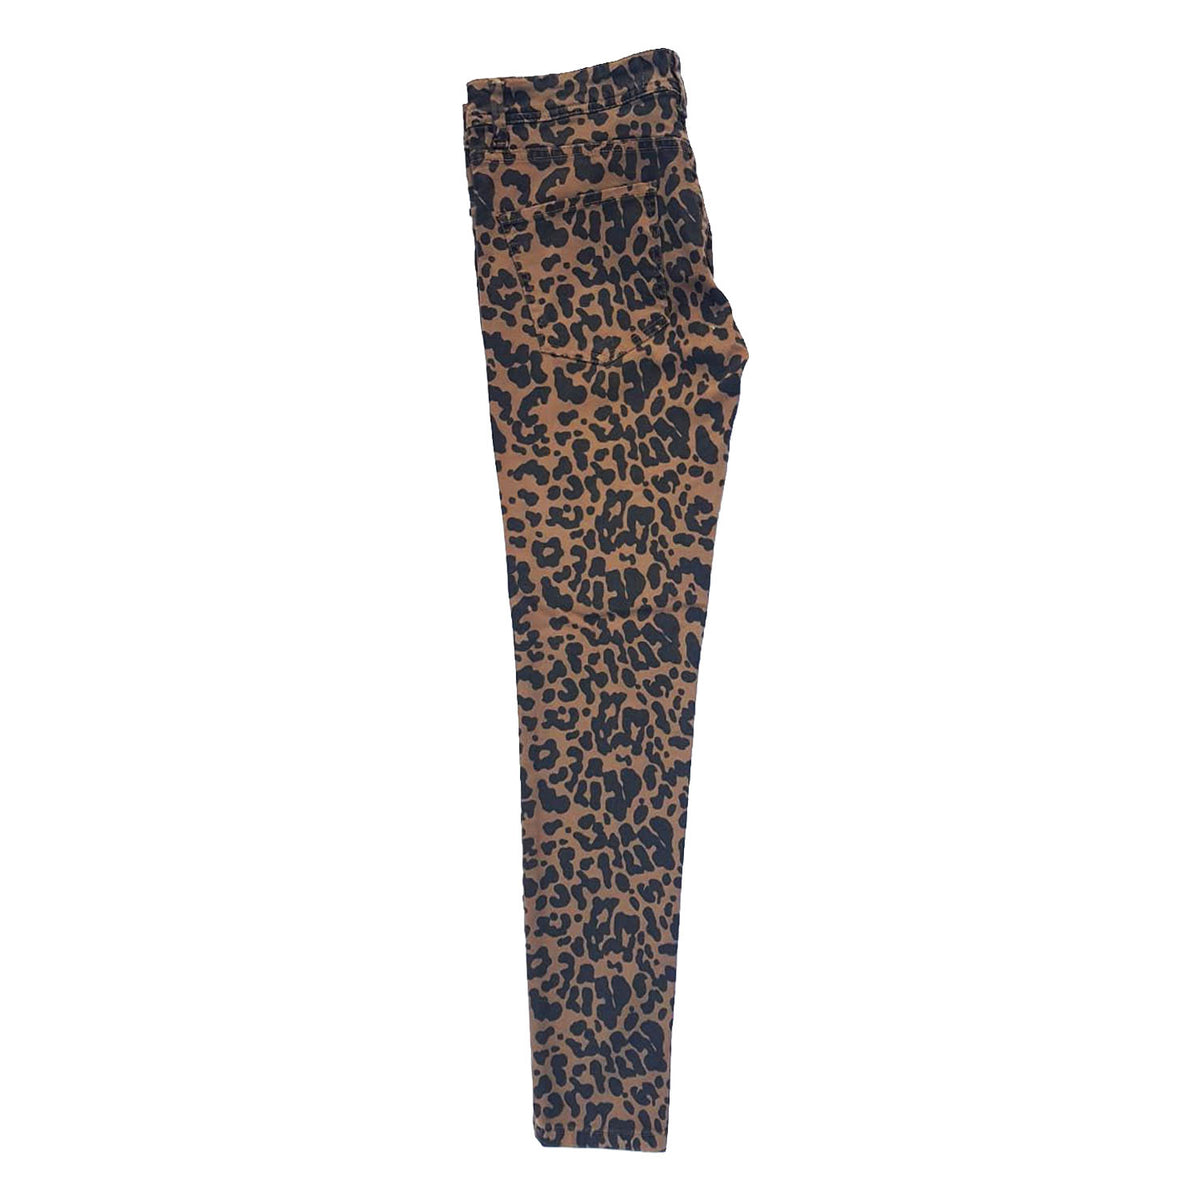 Jeans Rapsodia  Queen Kylie Leopard